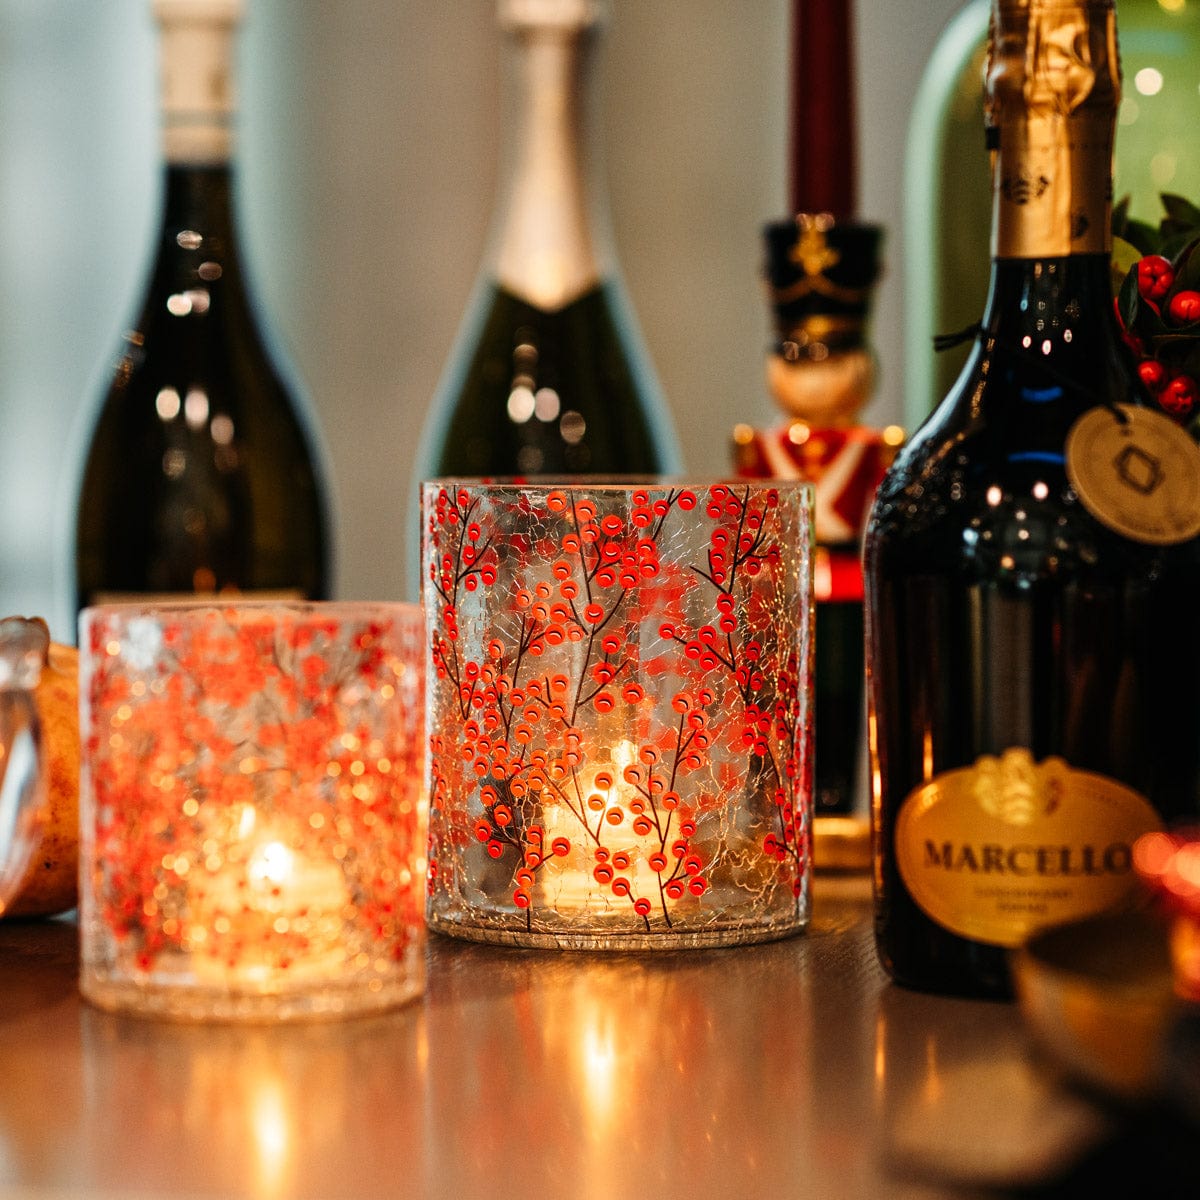 Italiving Kerzenglas Kerzenglas für Teelichter mit roten Beeren und Ästen H 13 cm Ø 12 cm